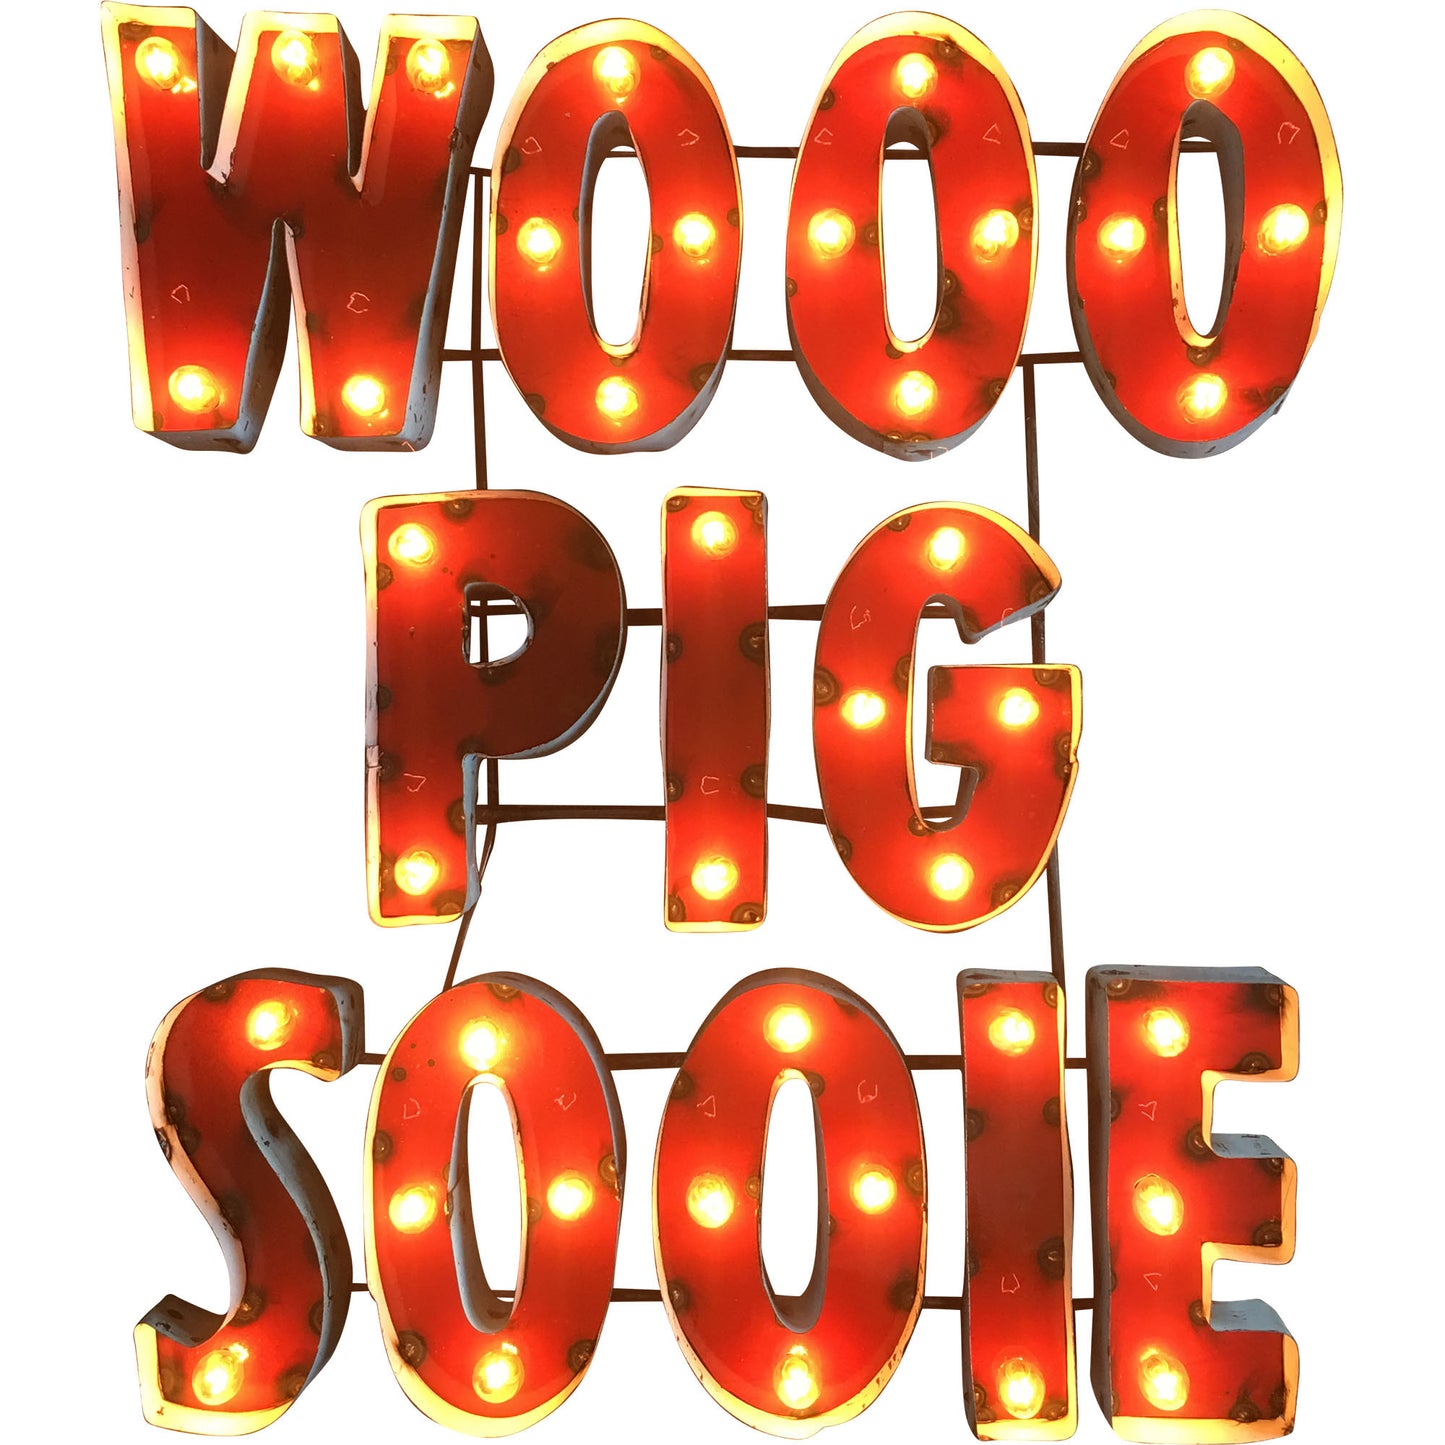 University of Arkansas "Wooo Pig Sooie" Lighted Recycled Metal Wall Decor